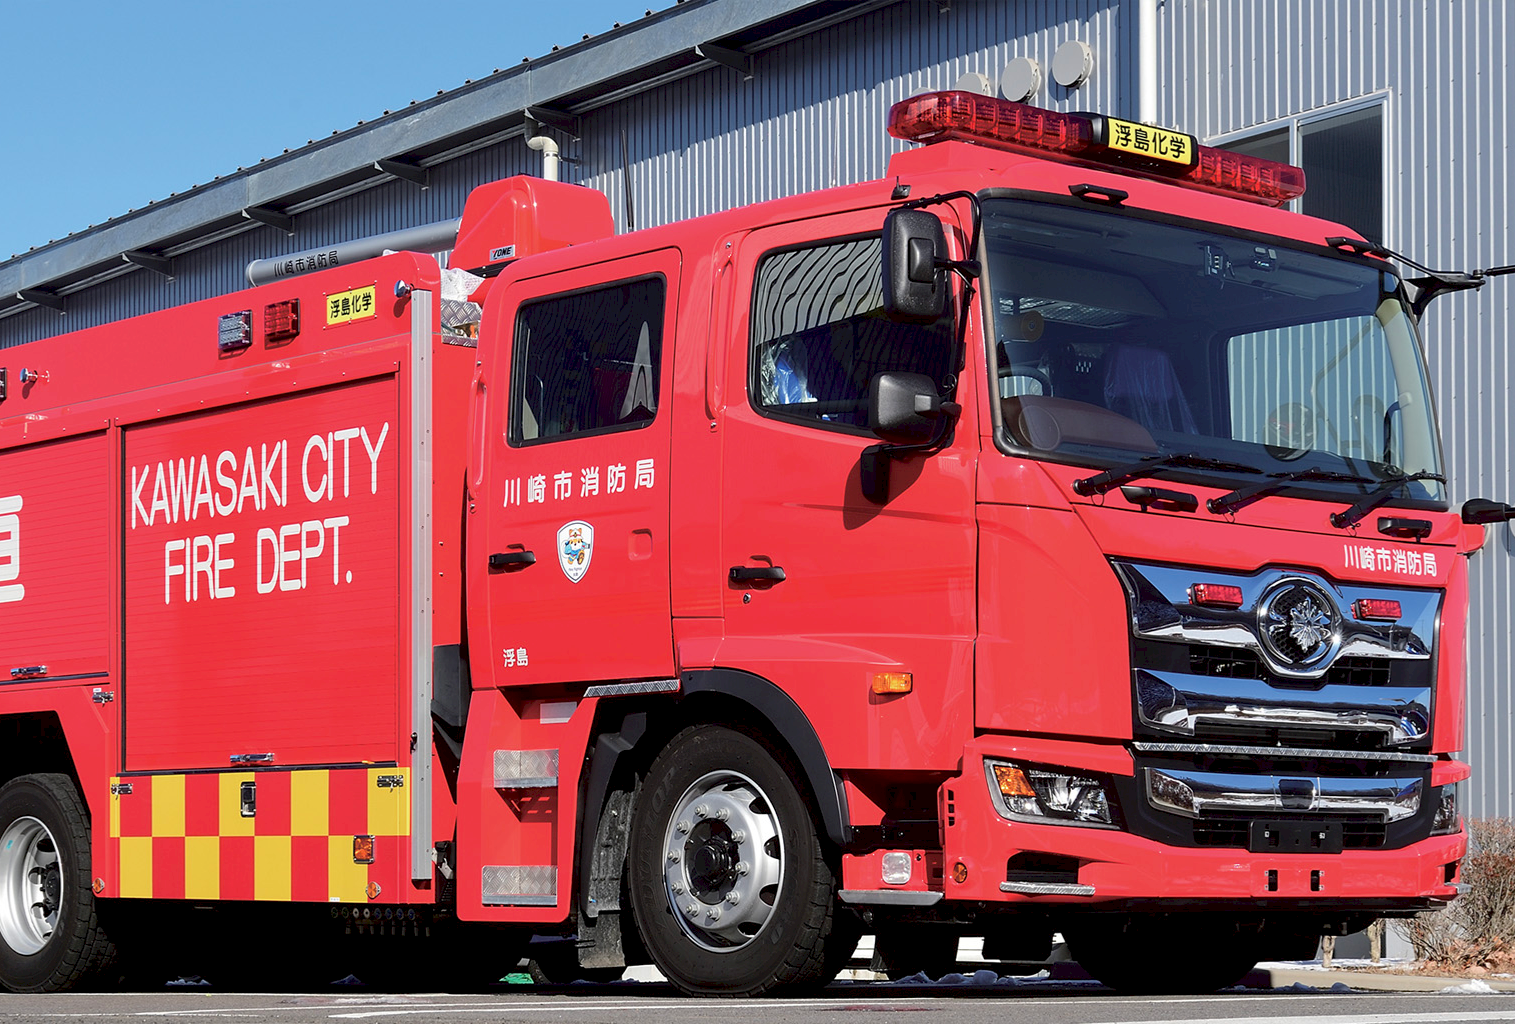 A proportioner for Kawasaki fire brigade